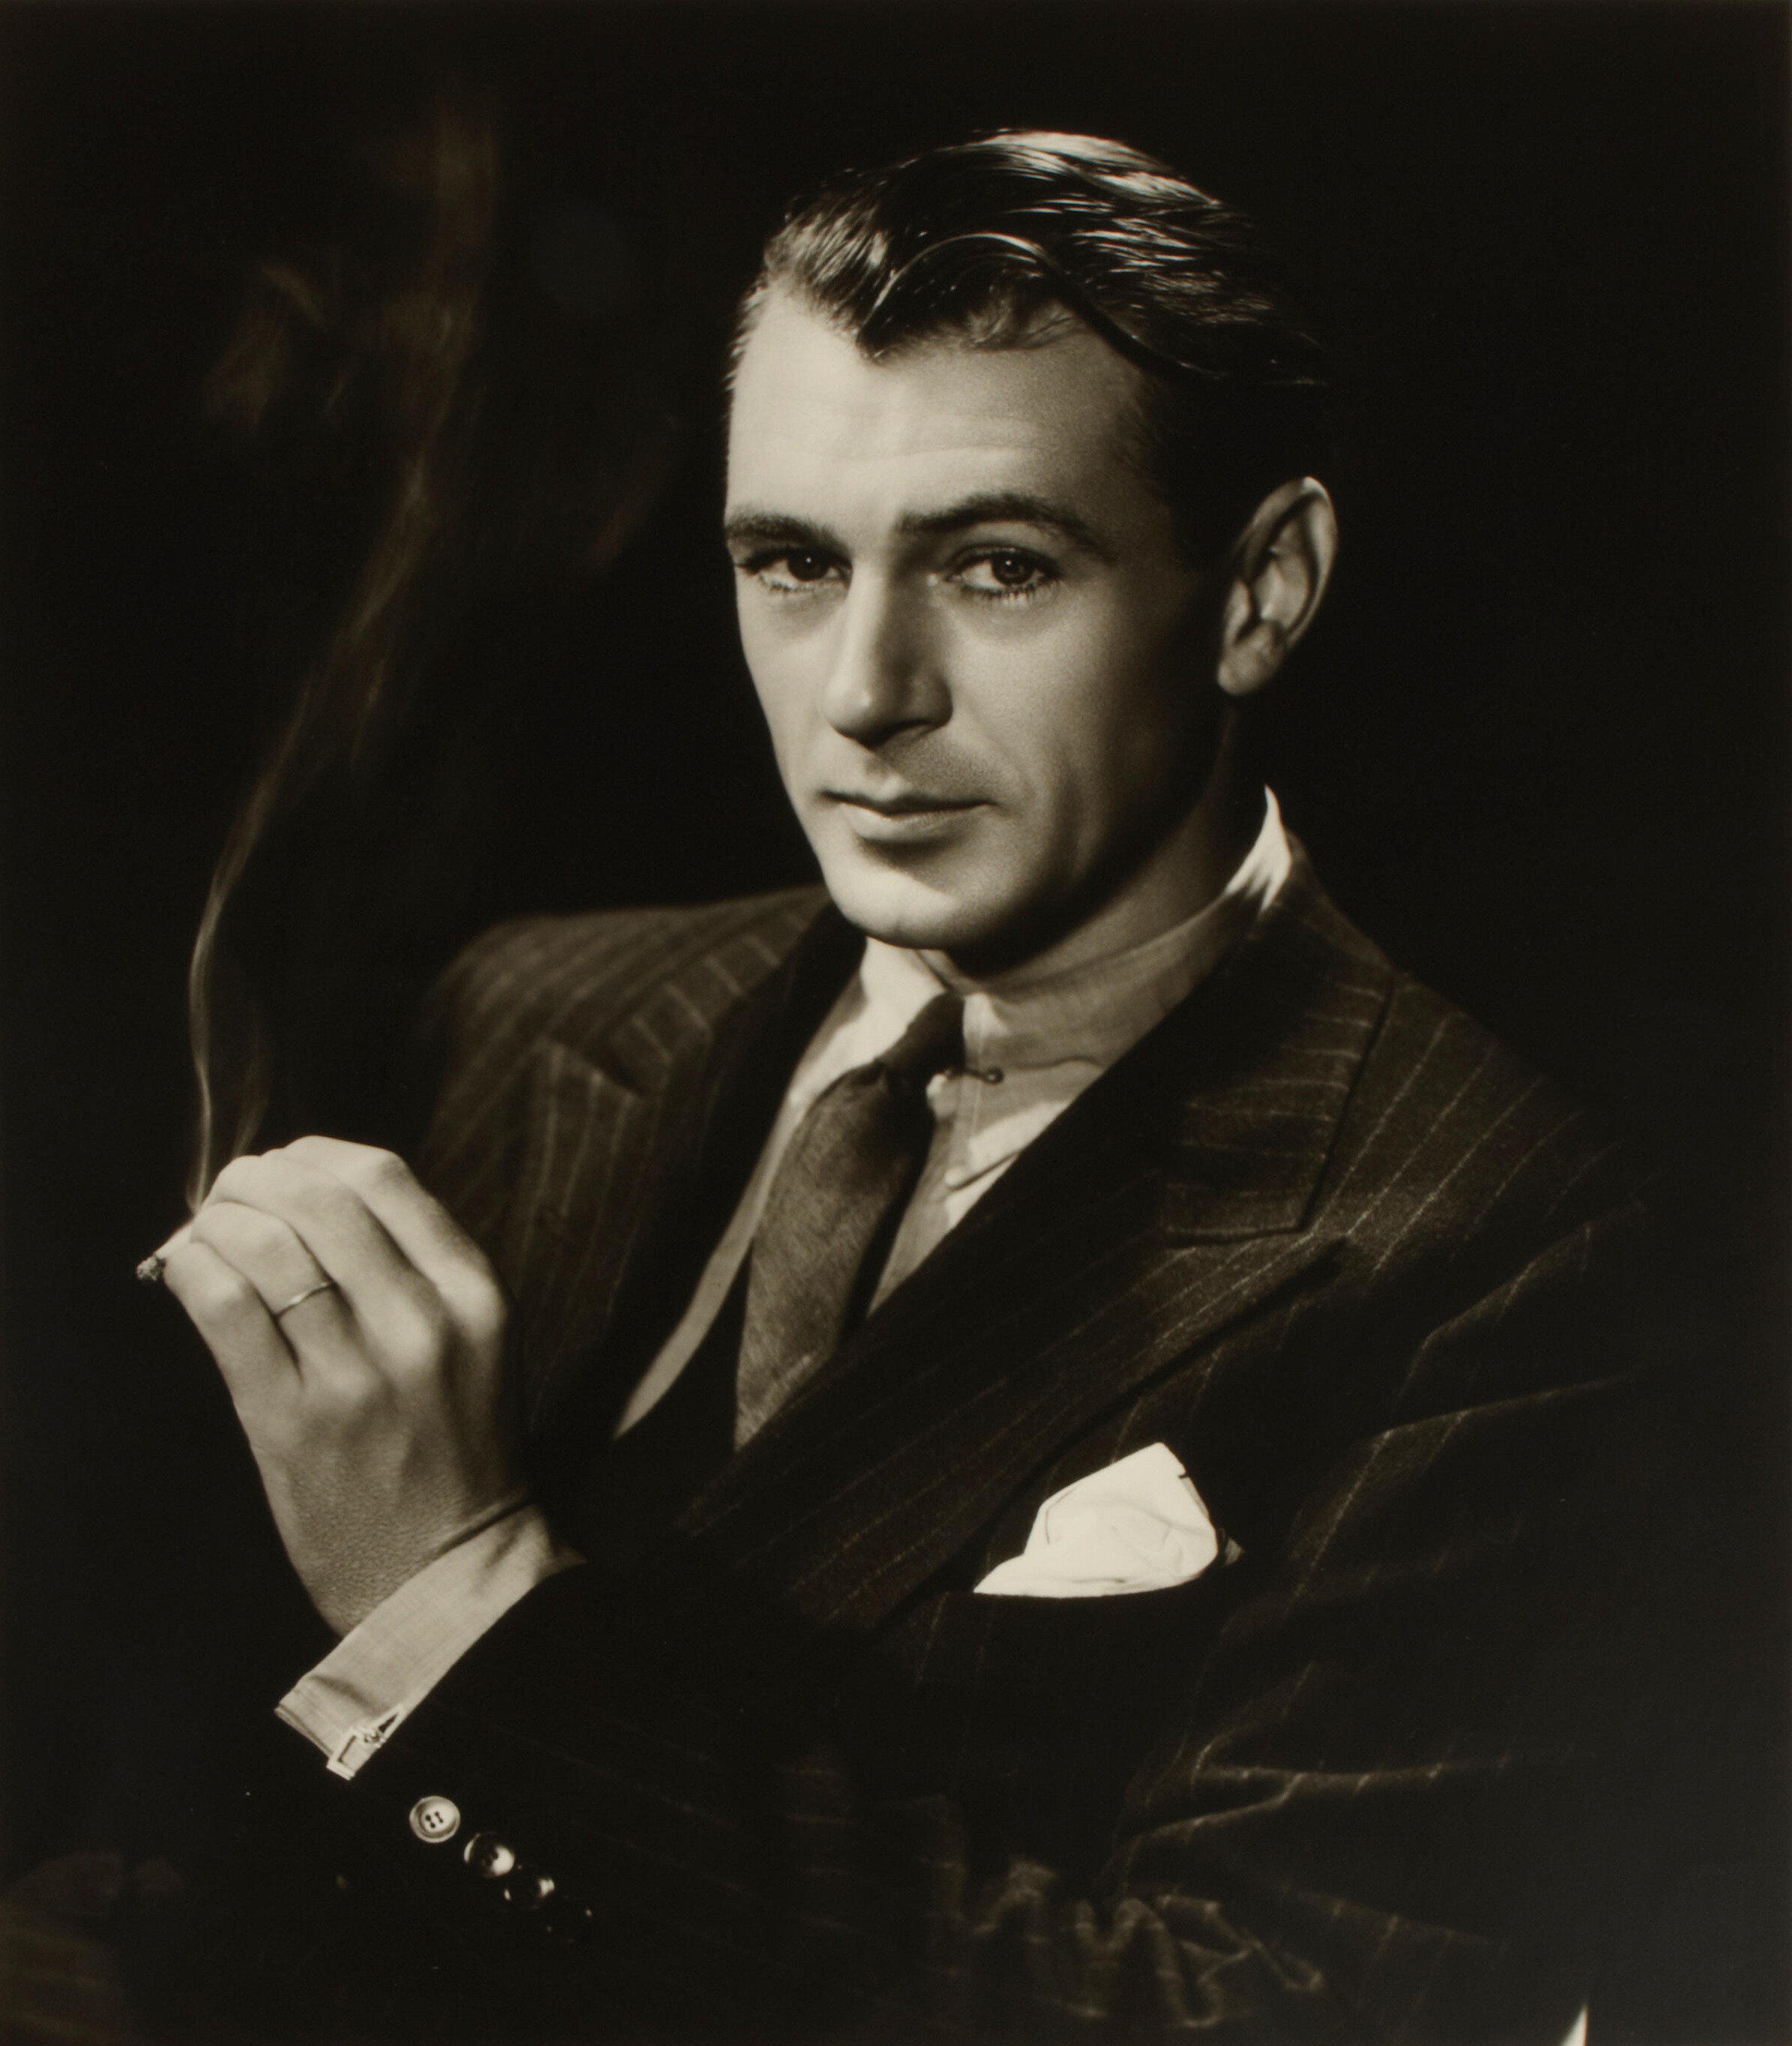 Гэри Купер, ок. 1940. Фотограф Джордж Харрелл